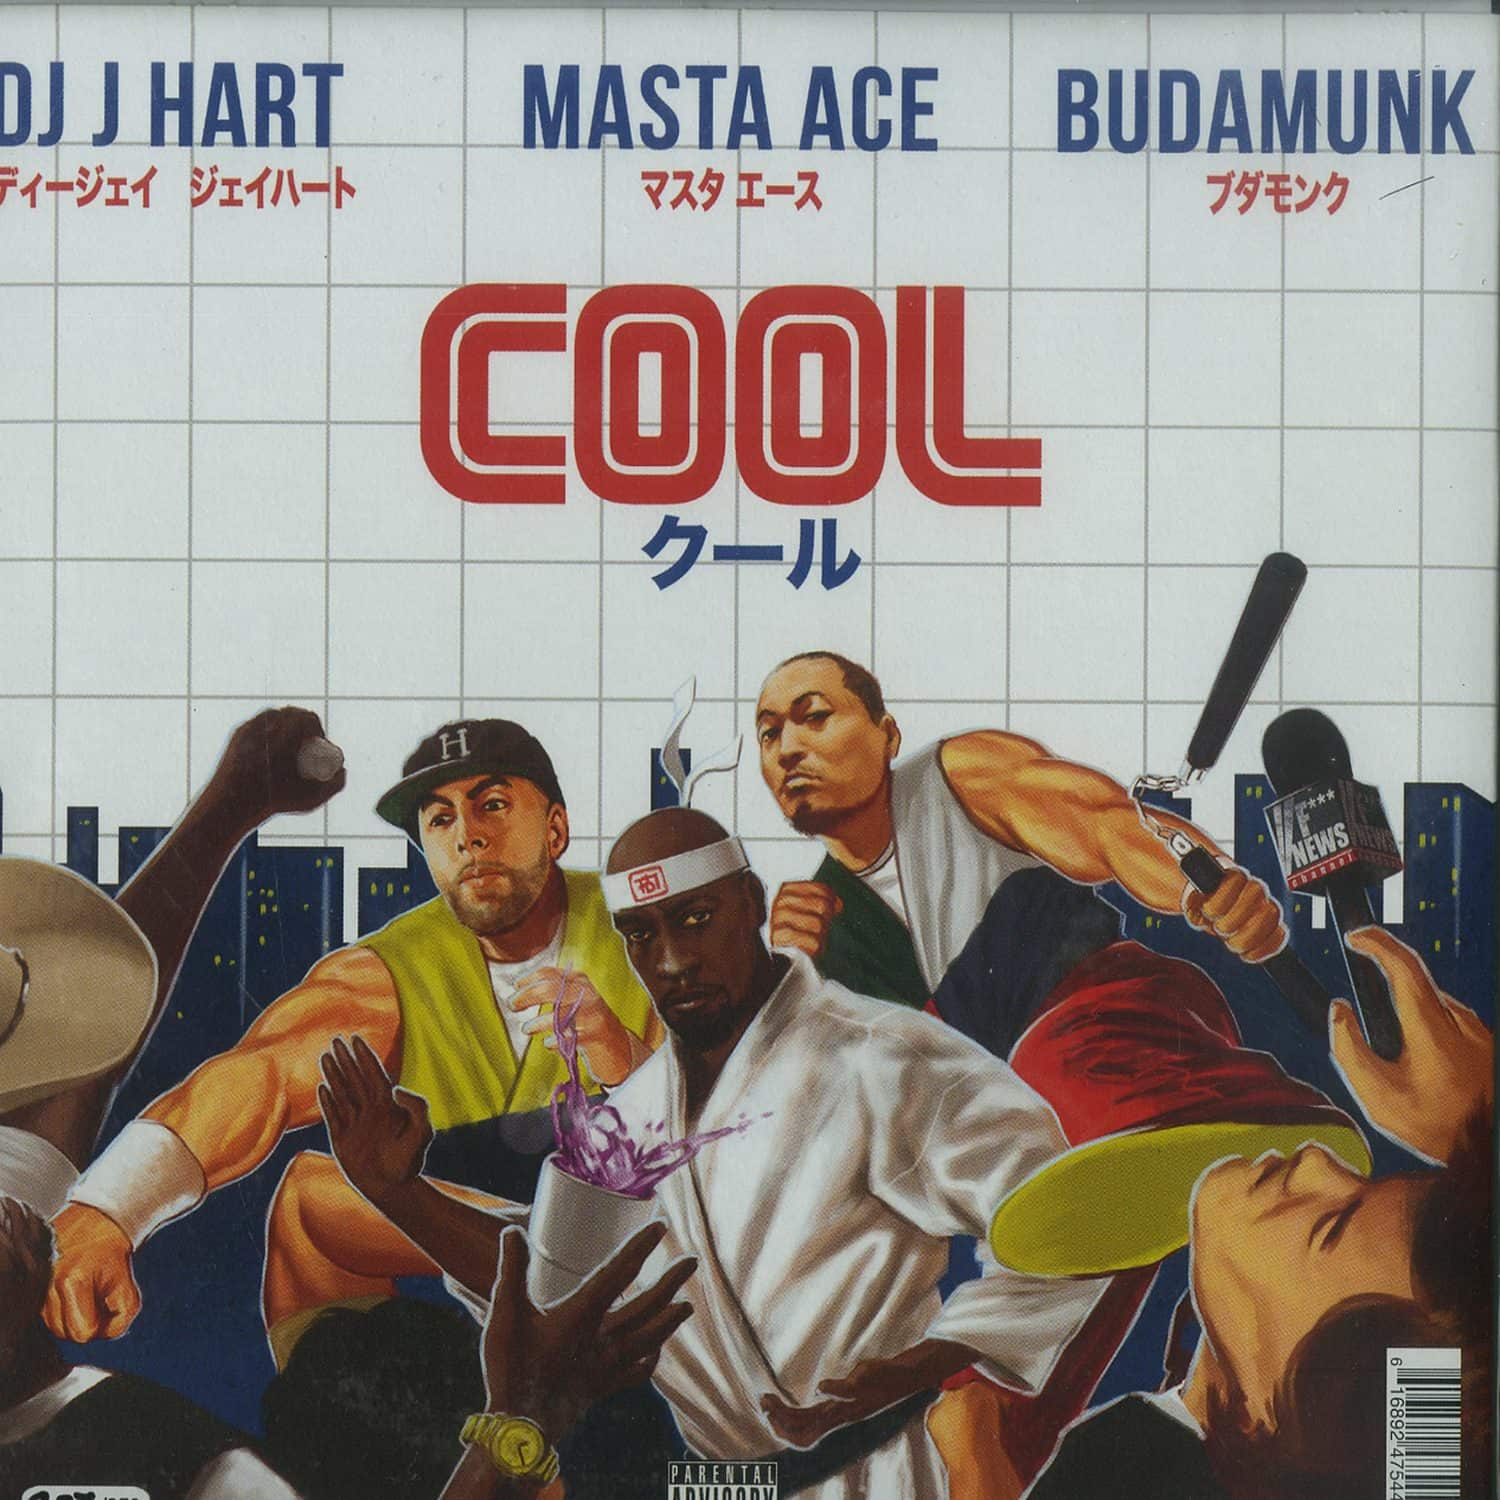 DJ J Hart / Masta Ace / Budamunk - COOL / TRINITY 